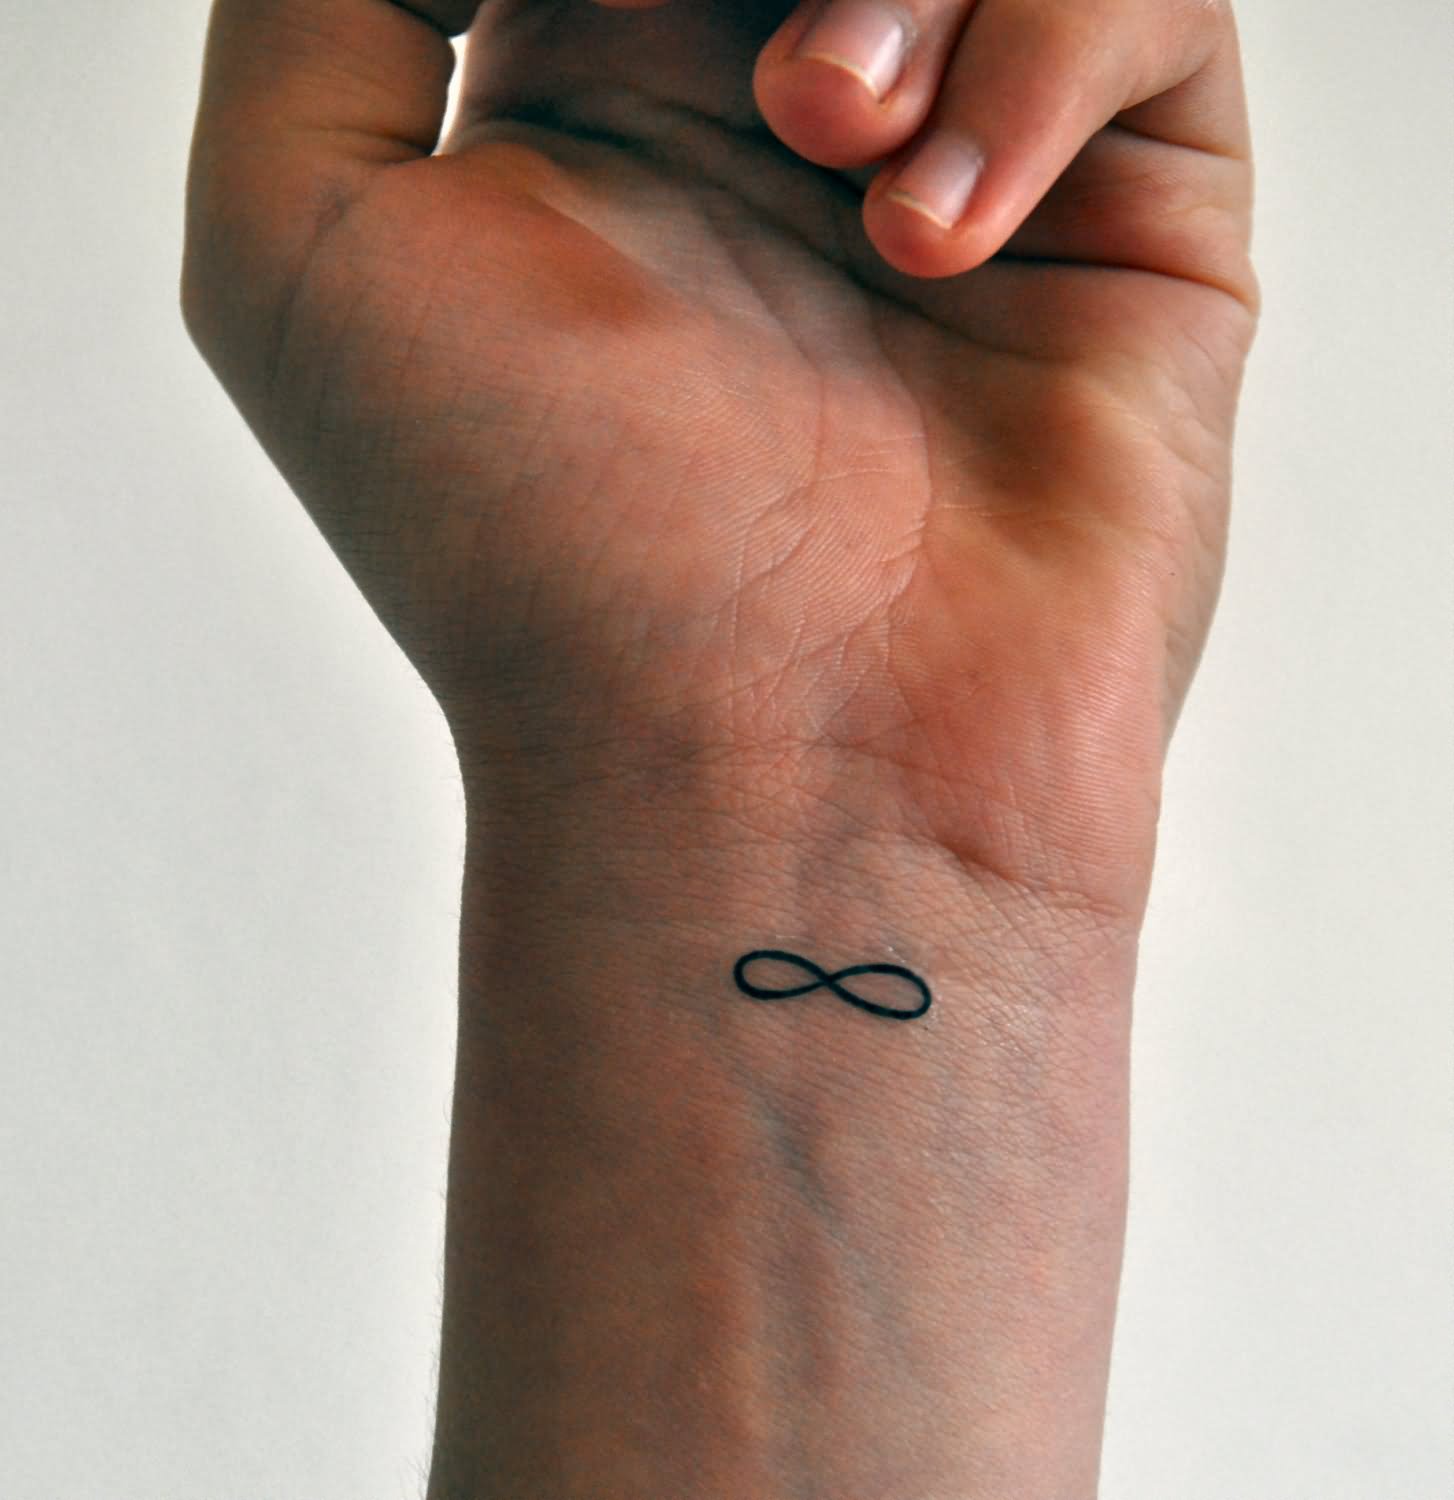 Small Infinity Friendship Symbol Tattoo On Wrist